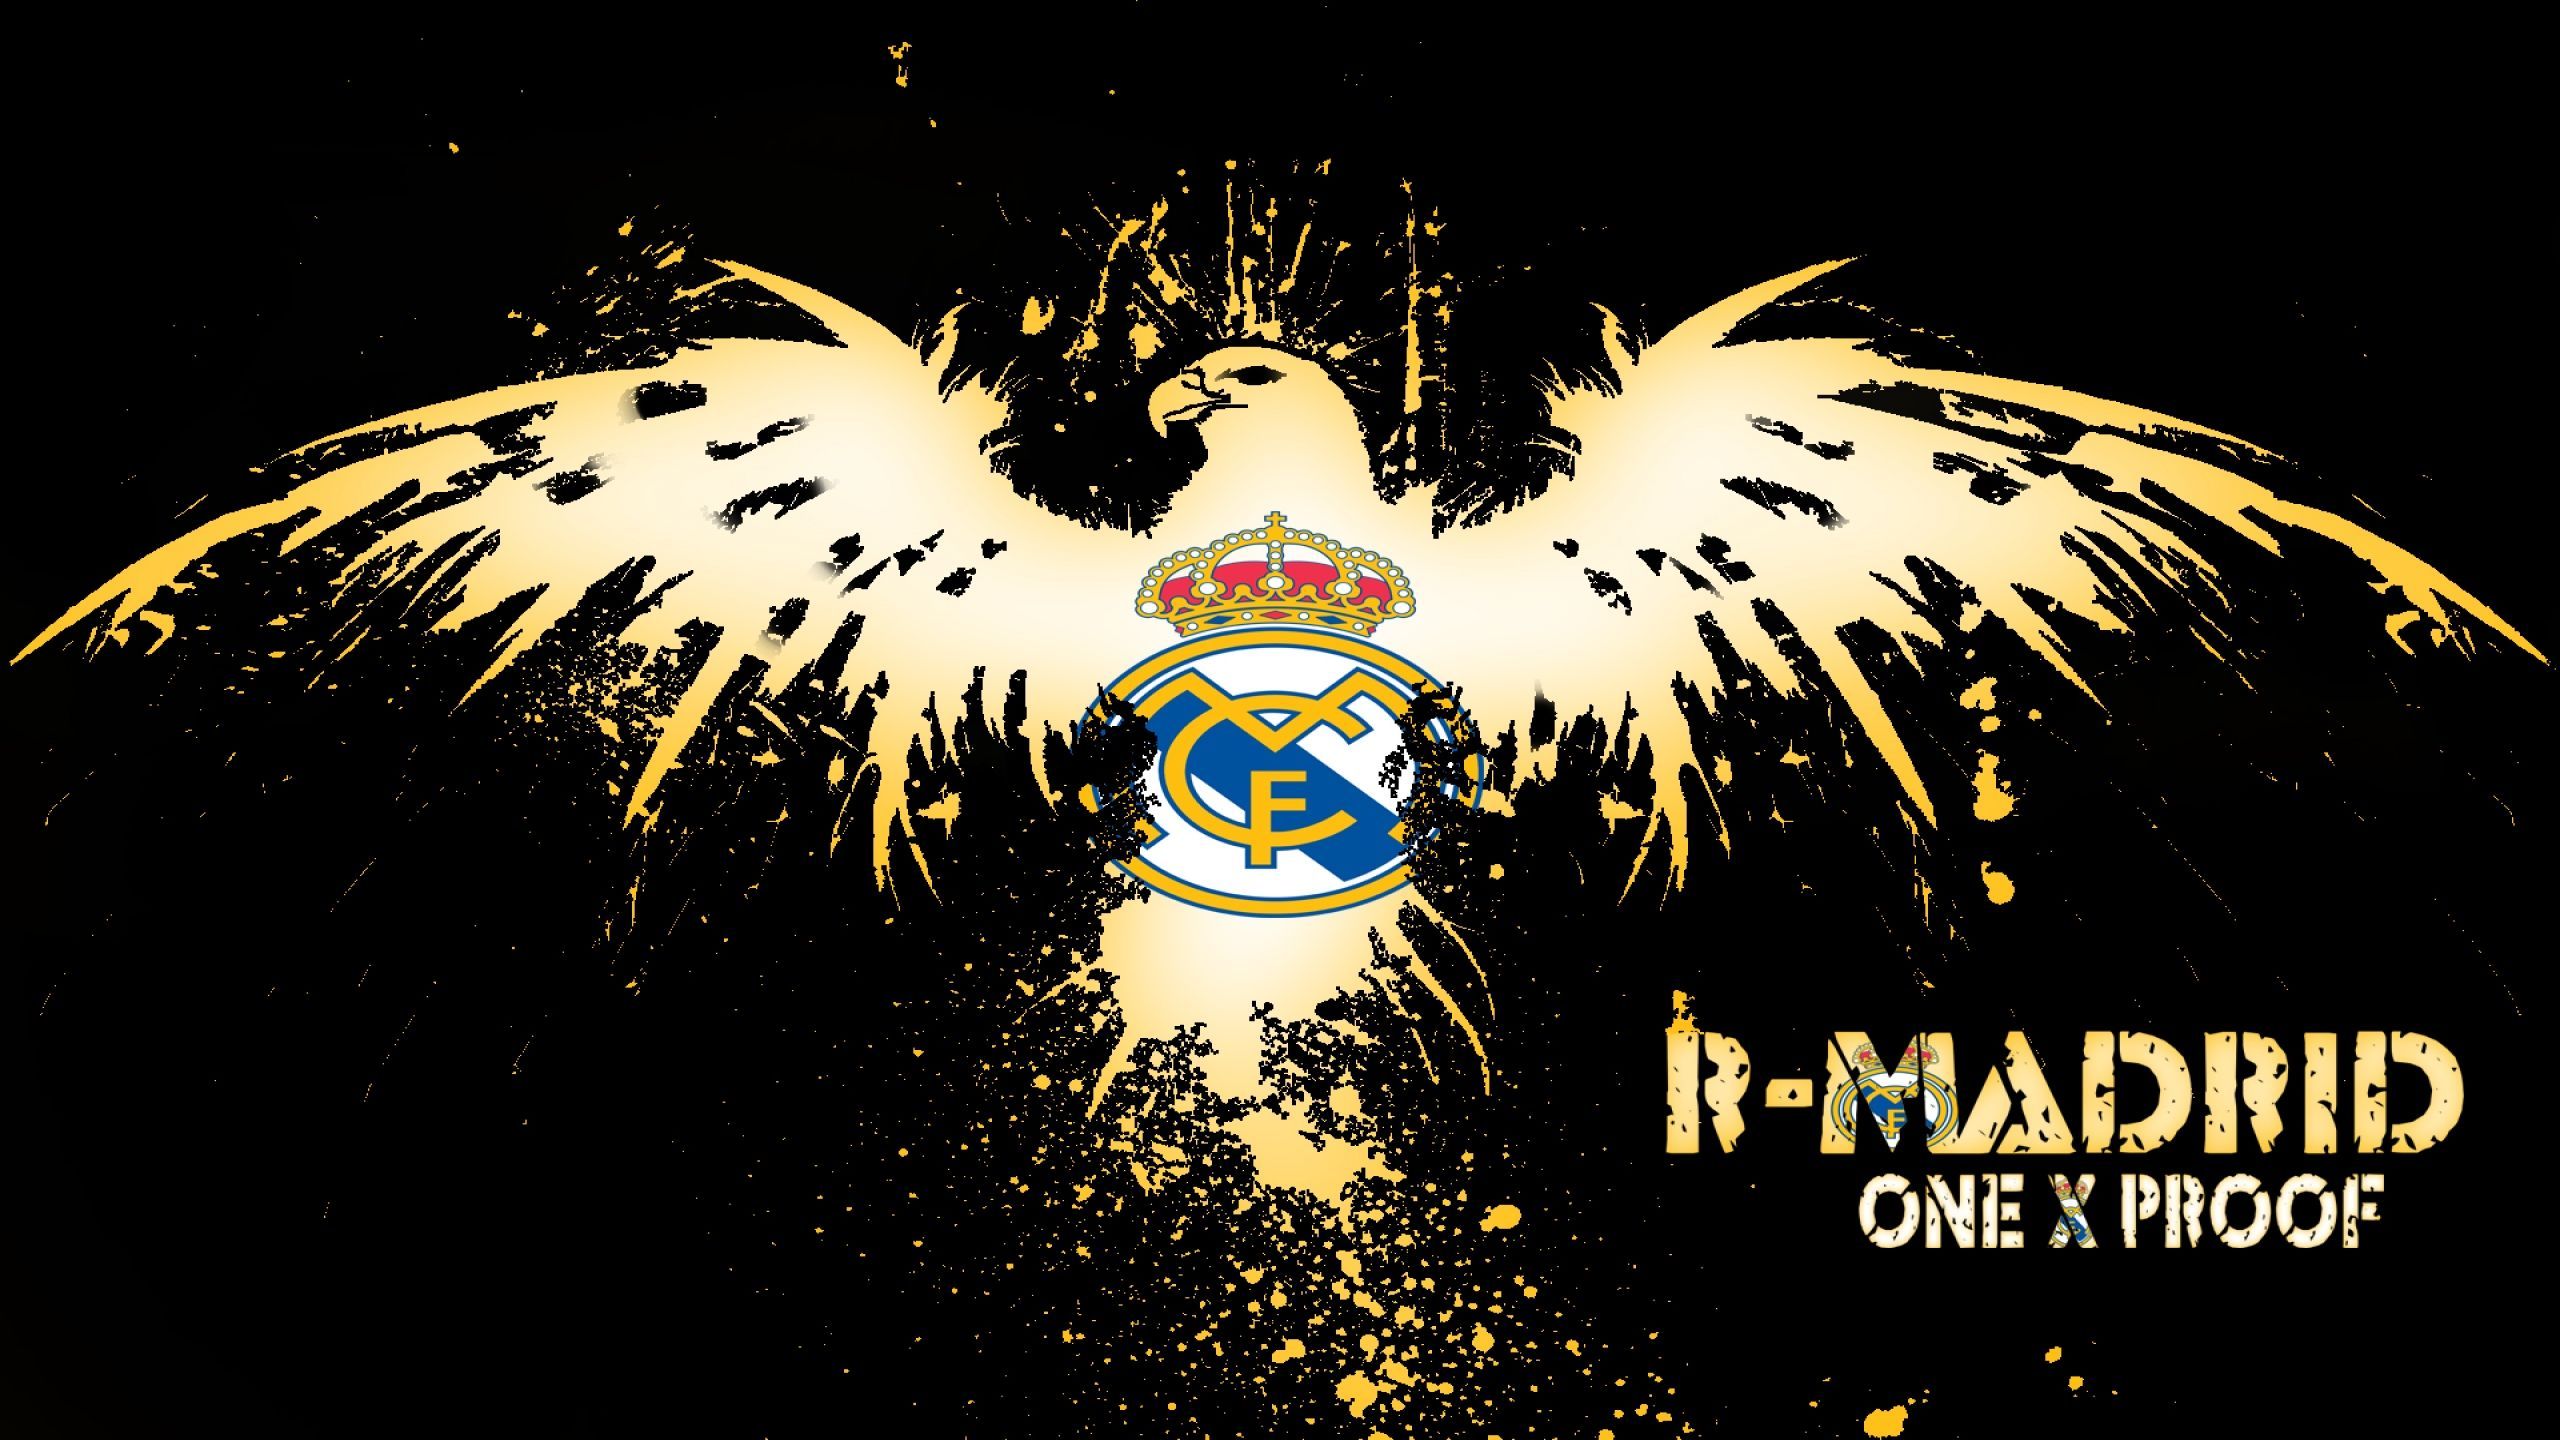 Real Madrid Soccerway Wallpaper HD. Real madrid wallpaper, Real madrid logo wallpaper, Madrid wallpaper